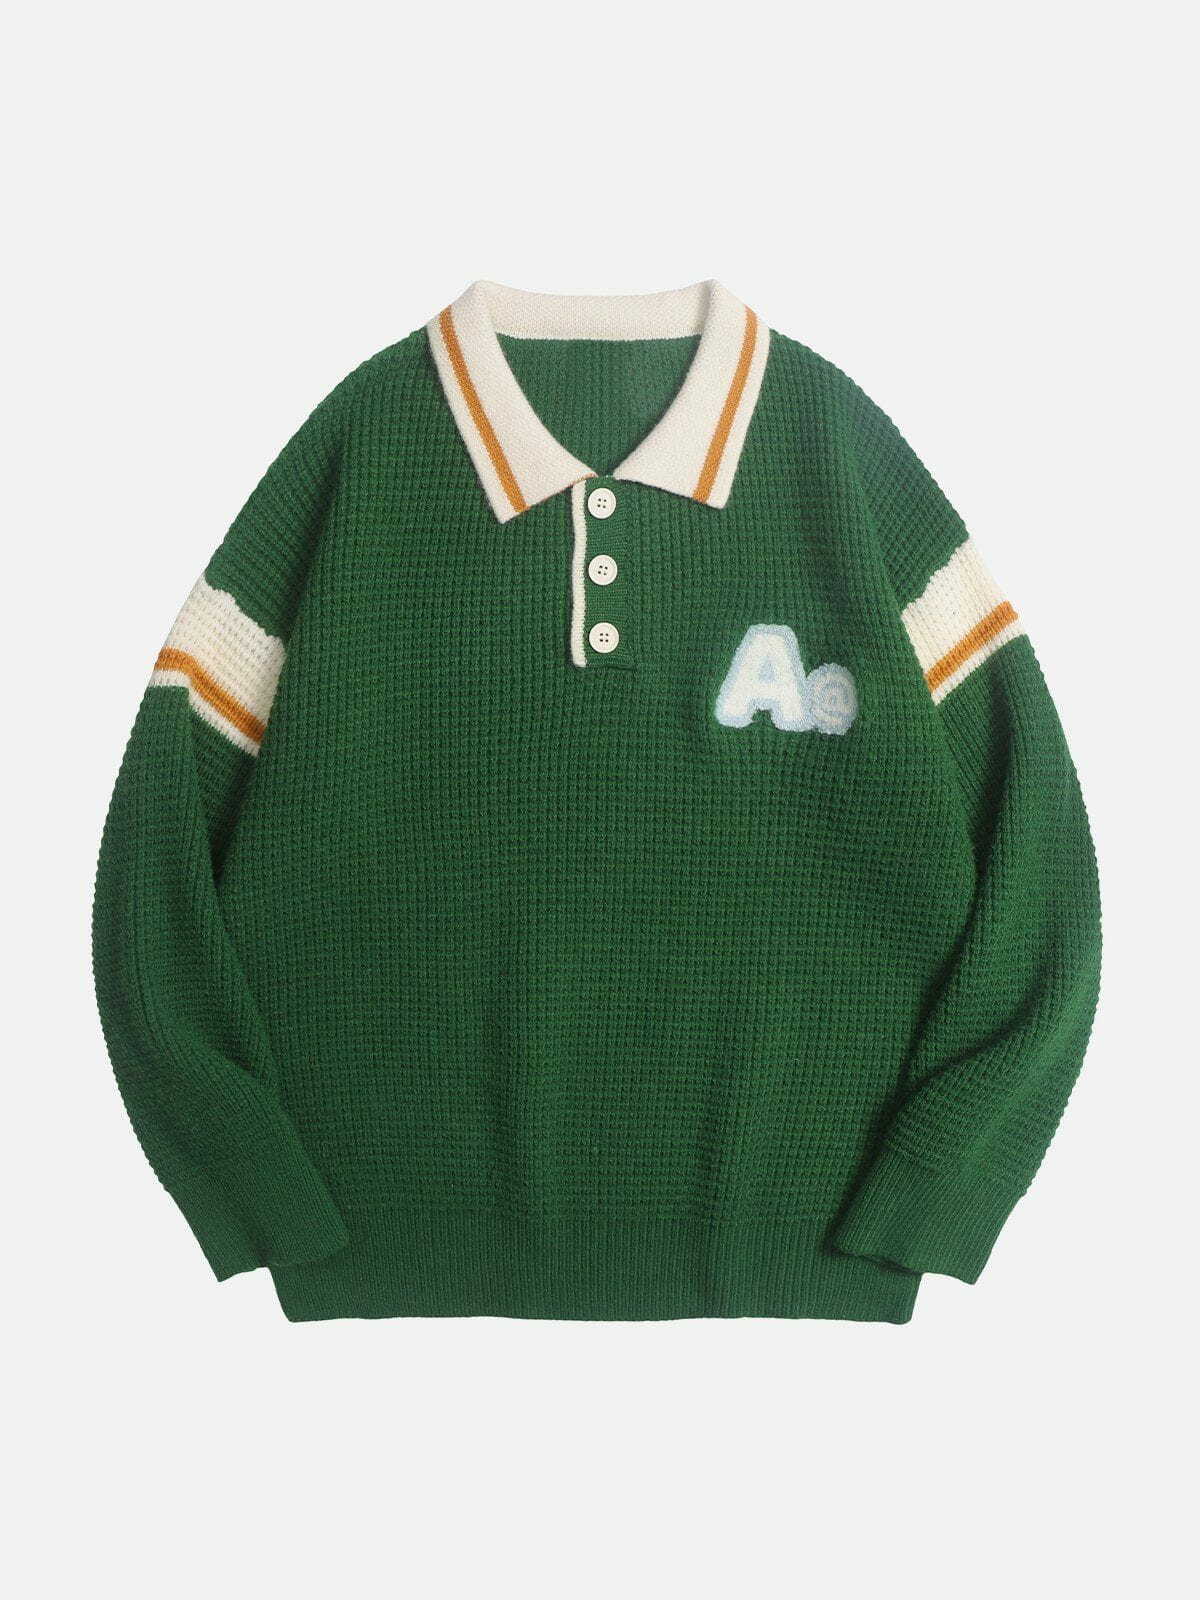 boutique vintage polo sweater retro cool & urban style 5494